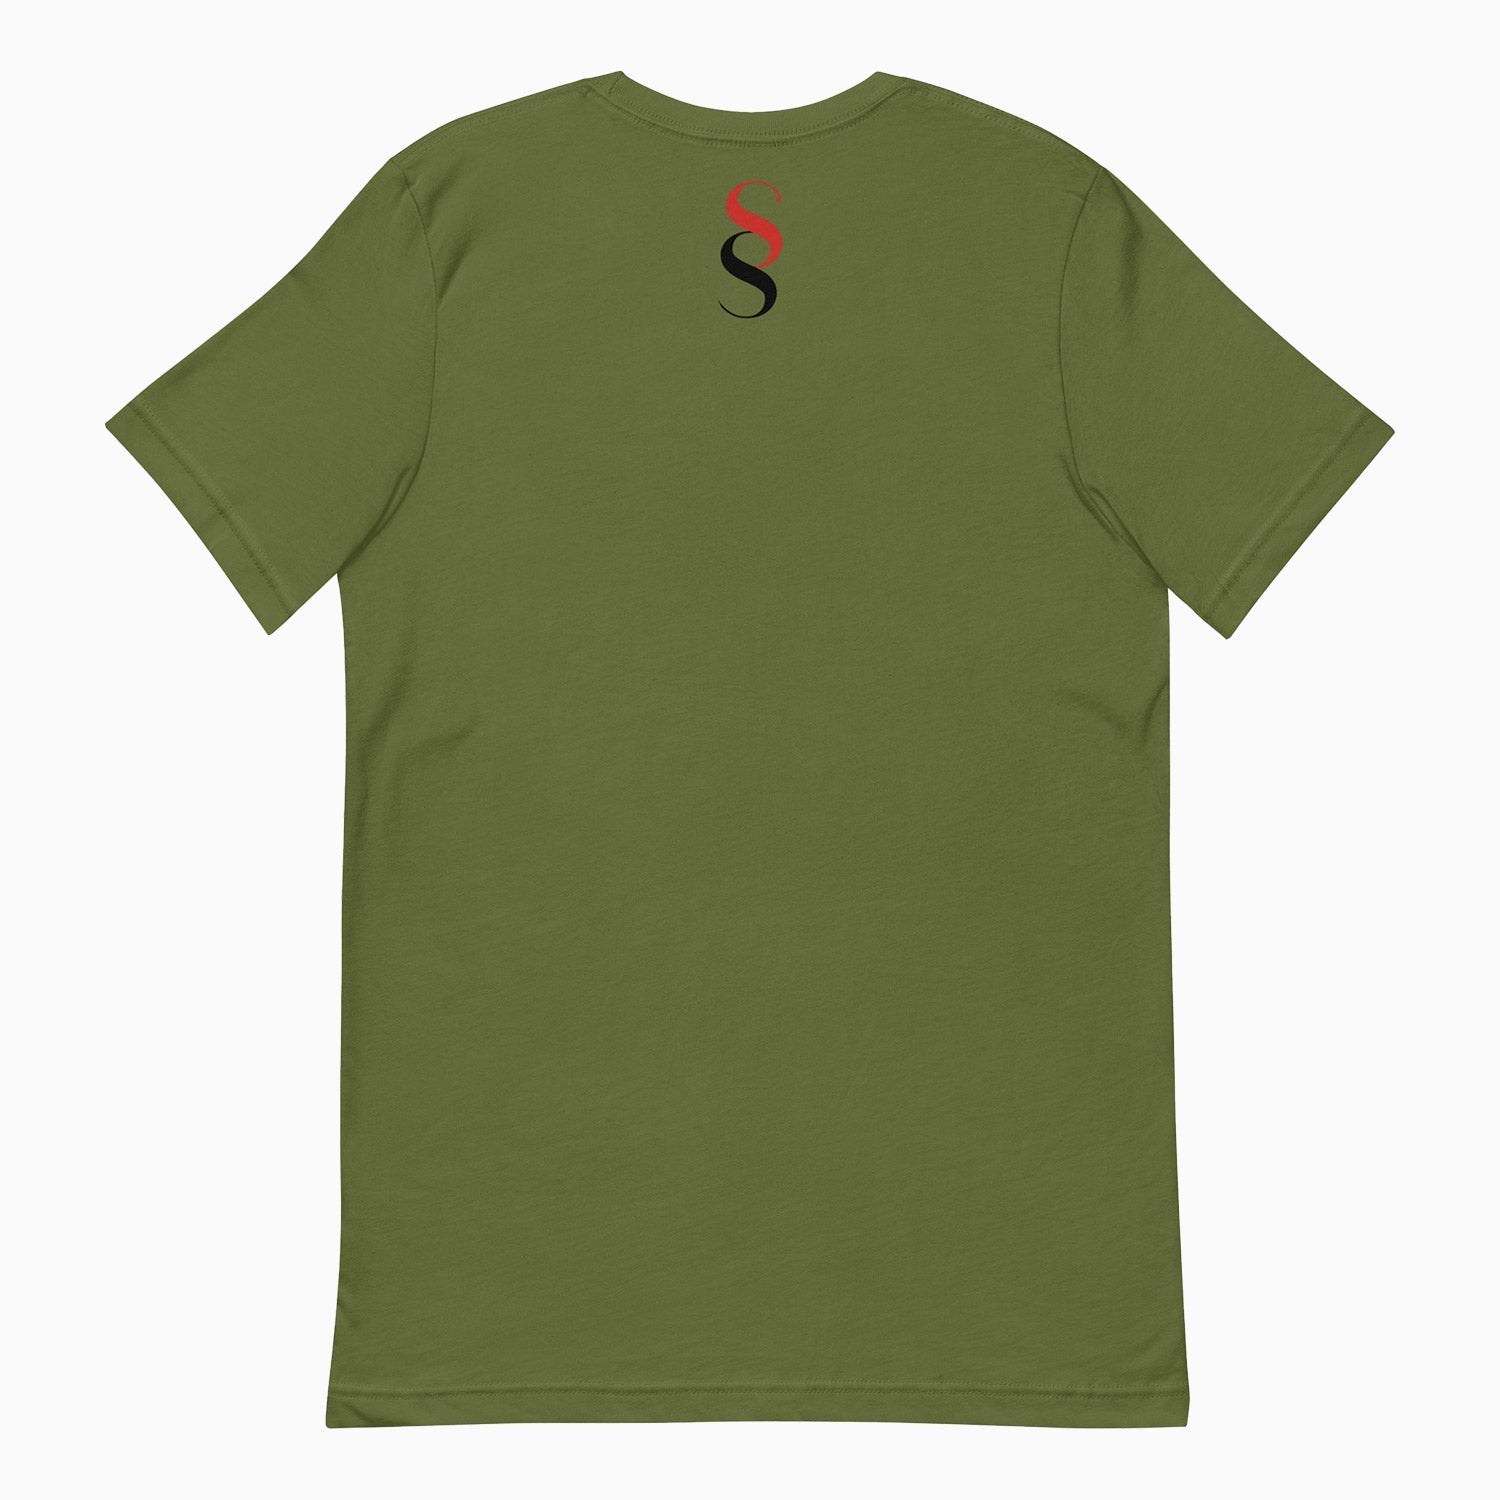 grenade-design-printed-crew-neck-olive-green-t-shirt-for-men-st102-327